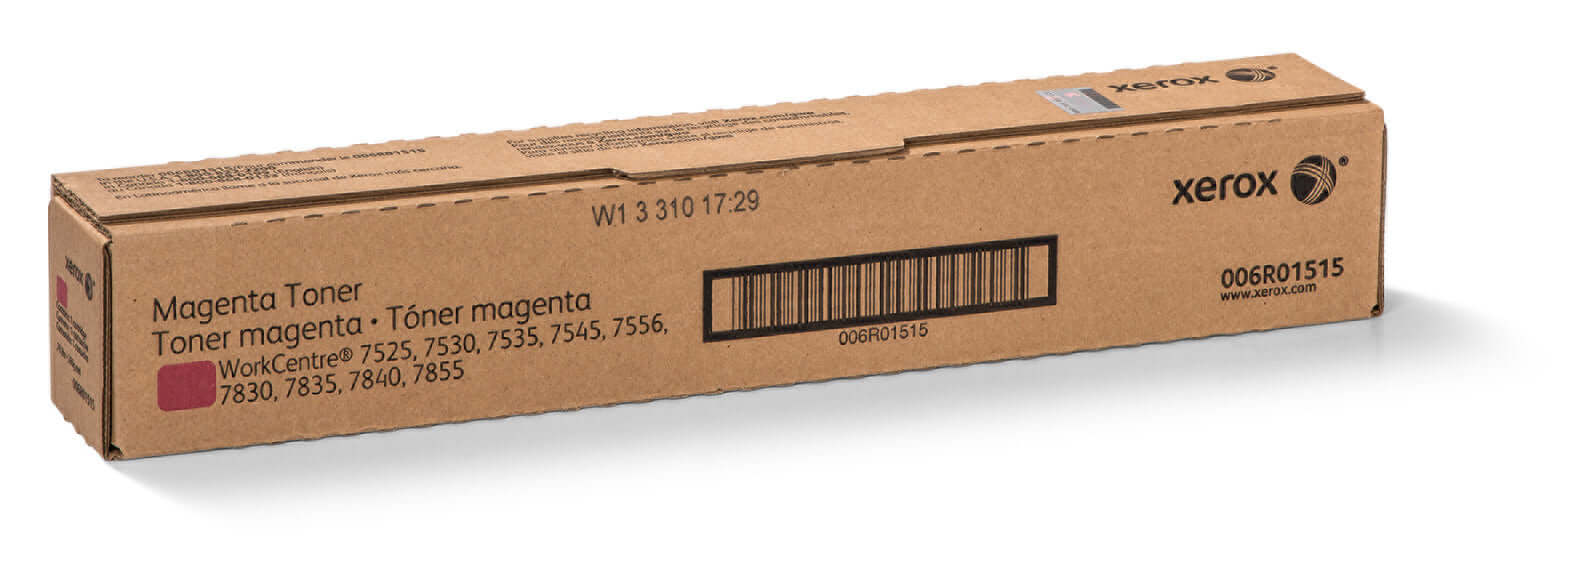 Xerox Magenta Toner Cartridge (15,000 Pages) 006R01515 for WorkCentre 7530/7535/7545/7556/7830/7835/7845/7855/7830i/7835i/7845i/7855i/7970/7970i-Scriptum Supplies